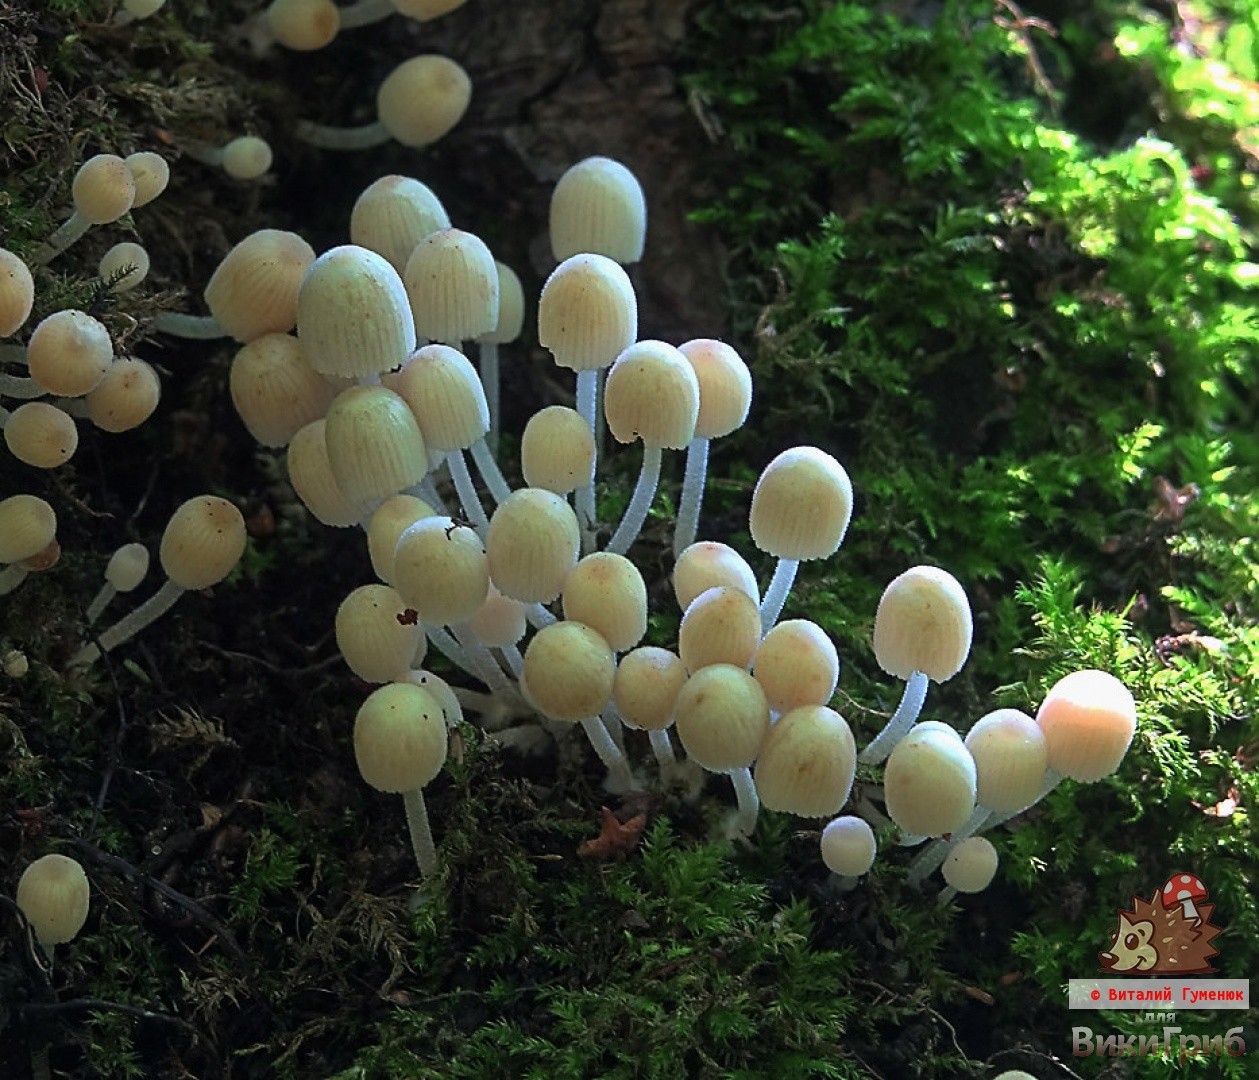 Dung beetle mushroom and alcohol: myths around koprin